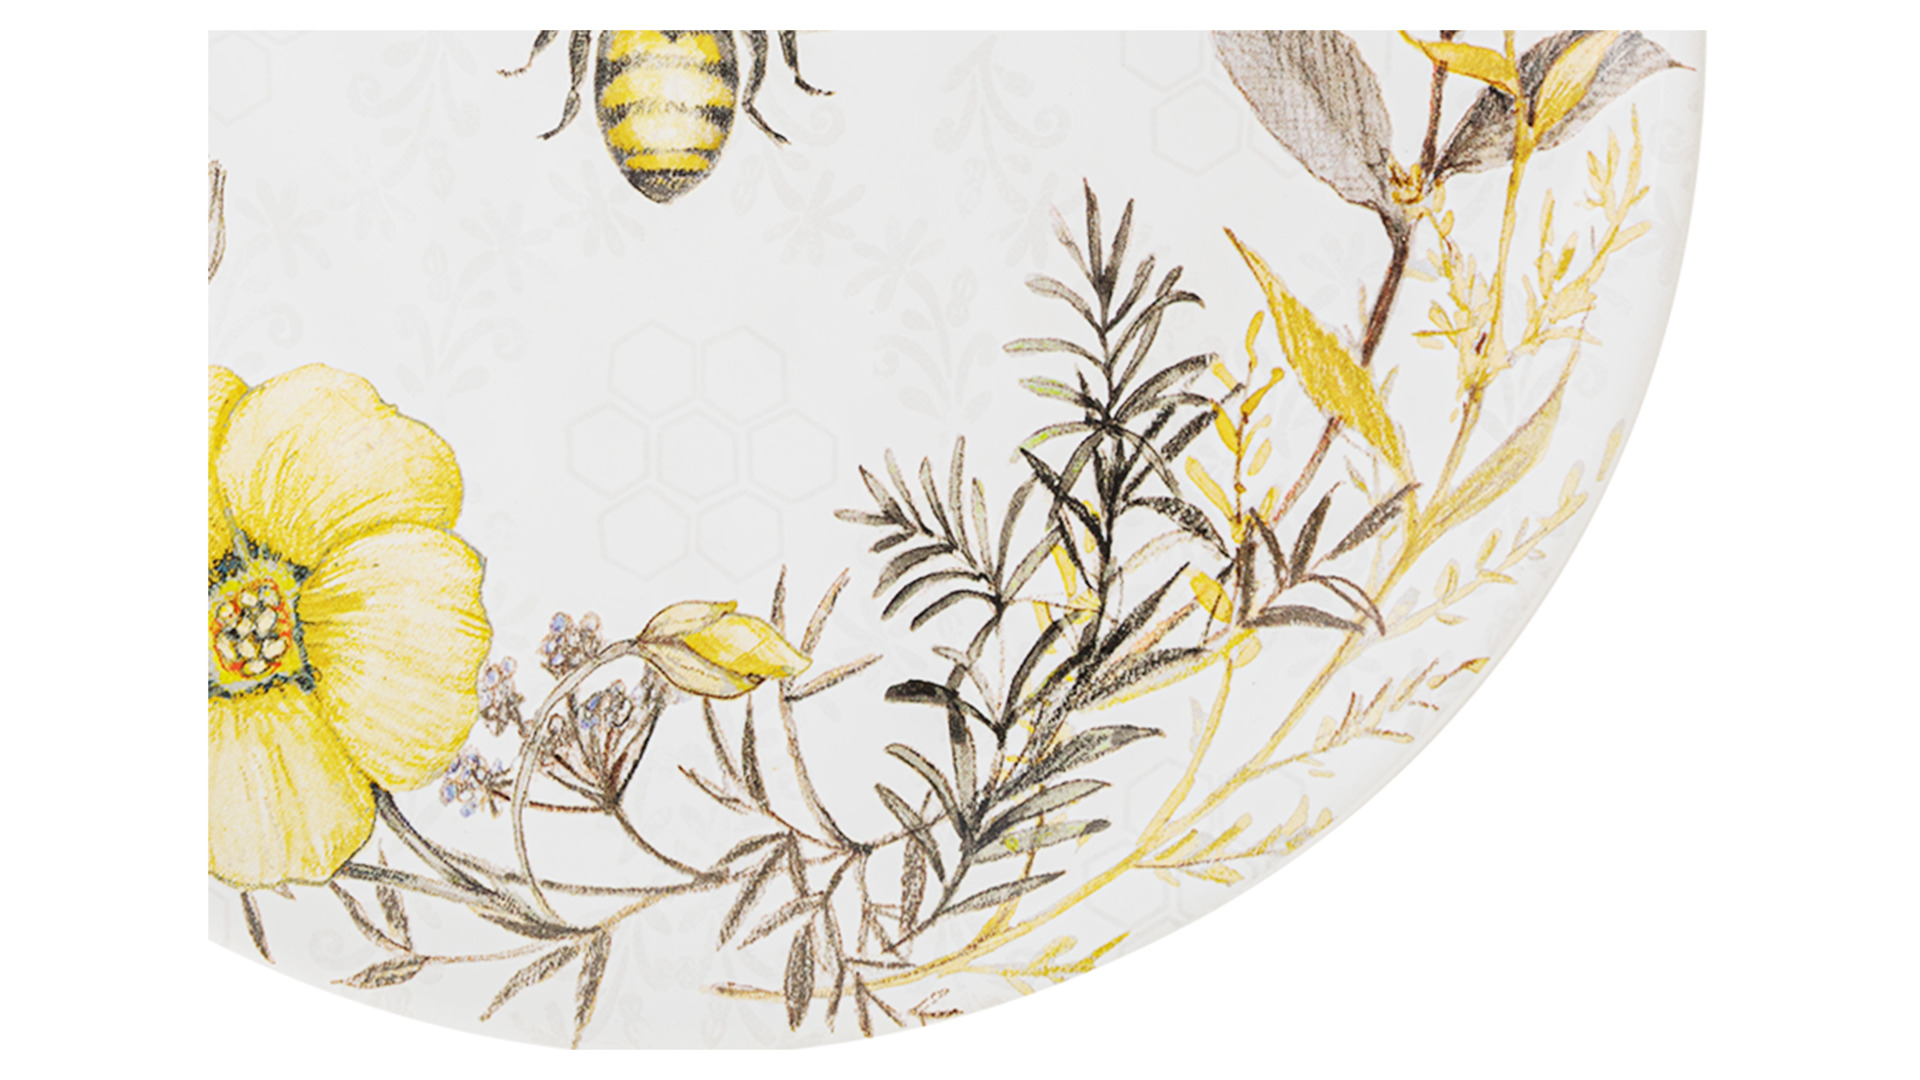 Тарелка обеденная Certified Int. Пчелки 27 см, керамика